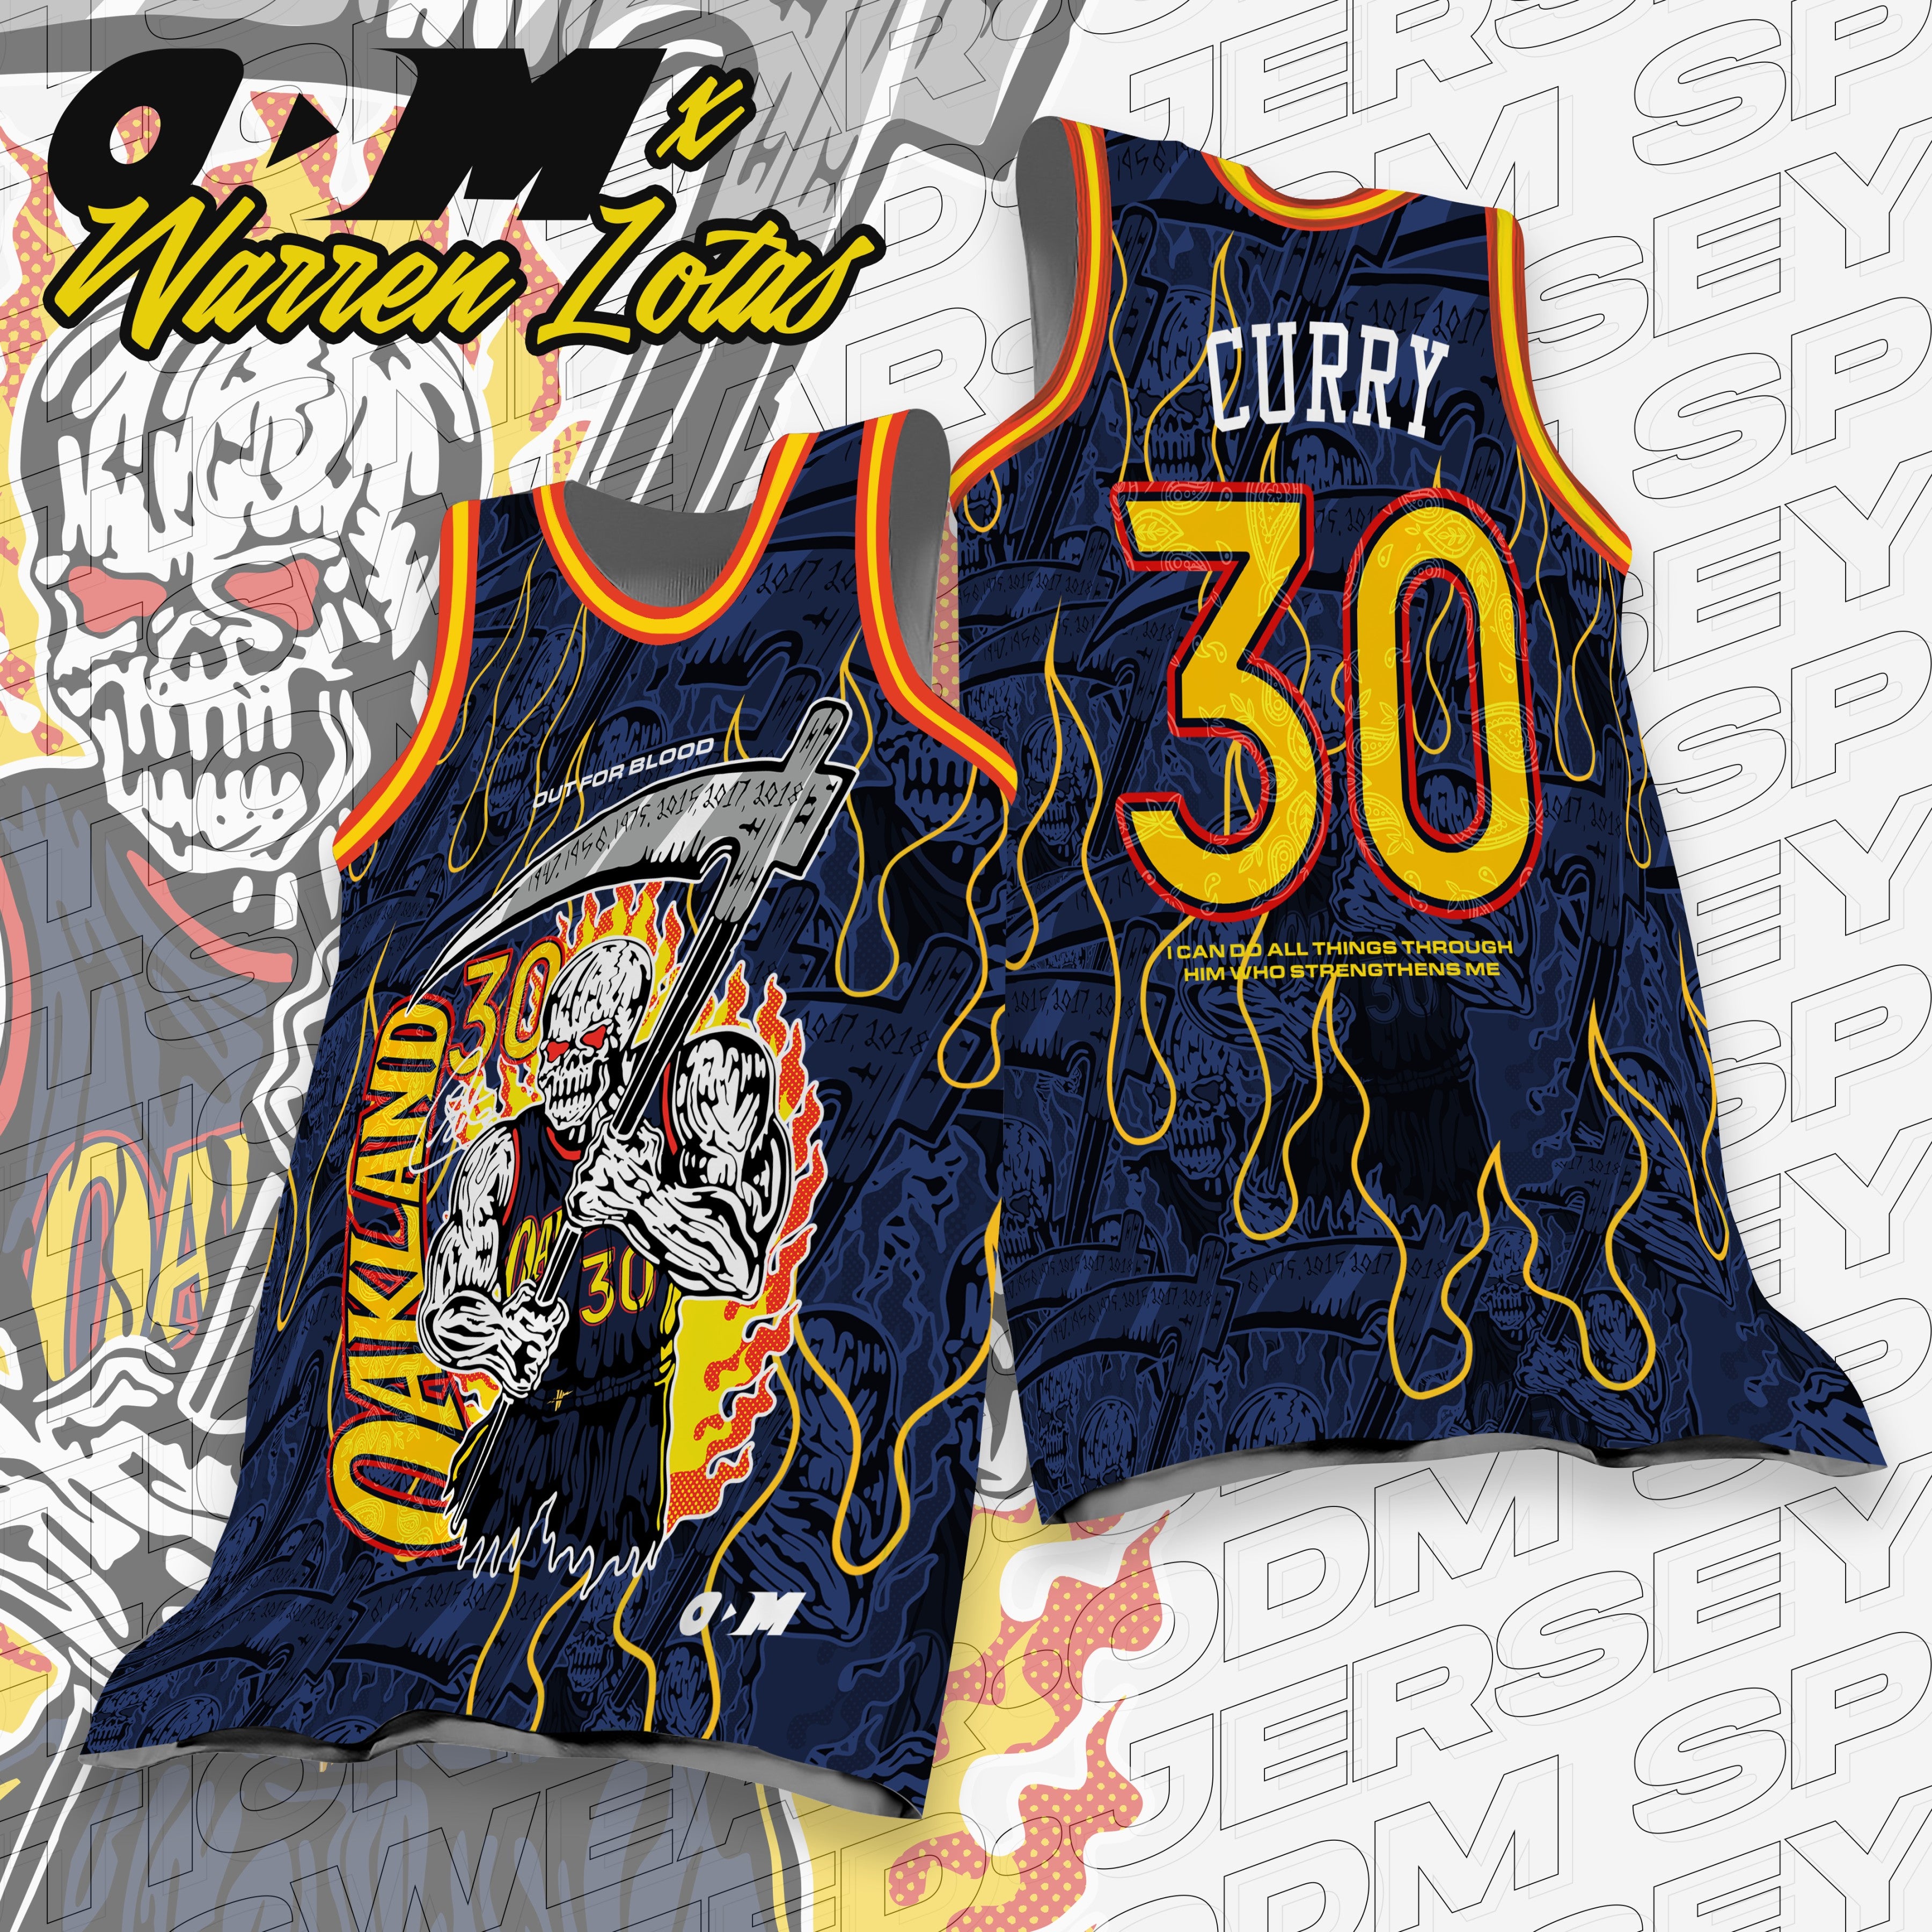 Curry GSW x Warren Lotas inspired jersey